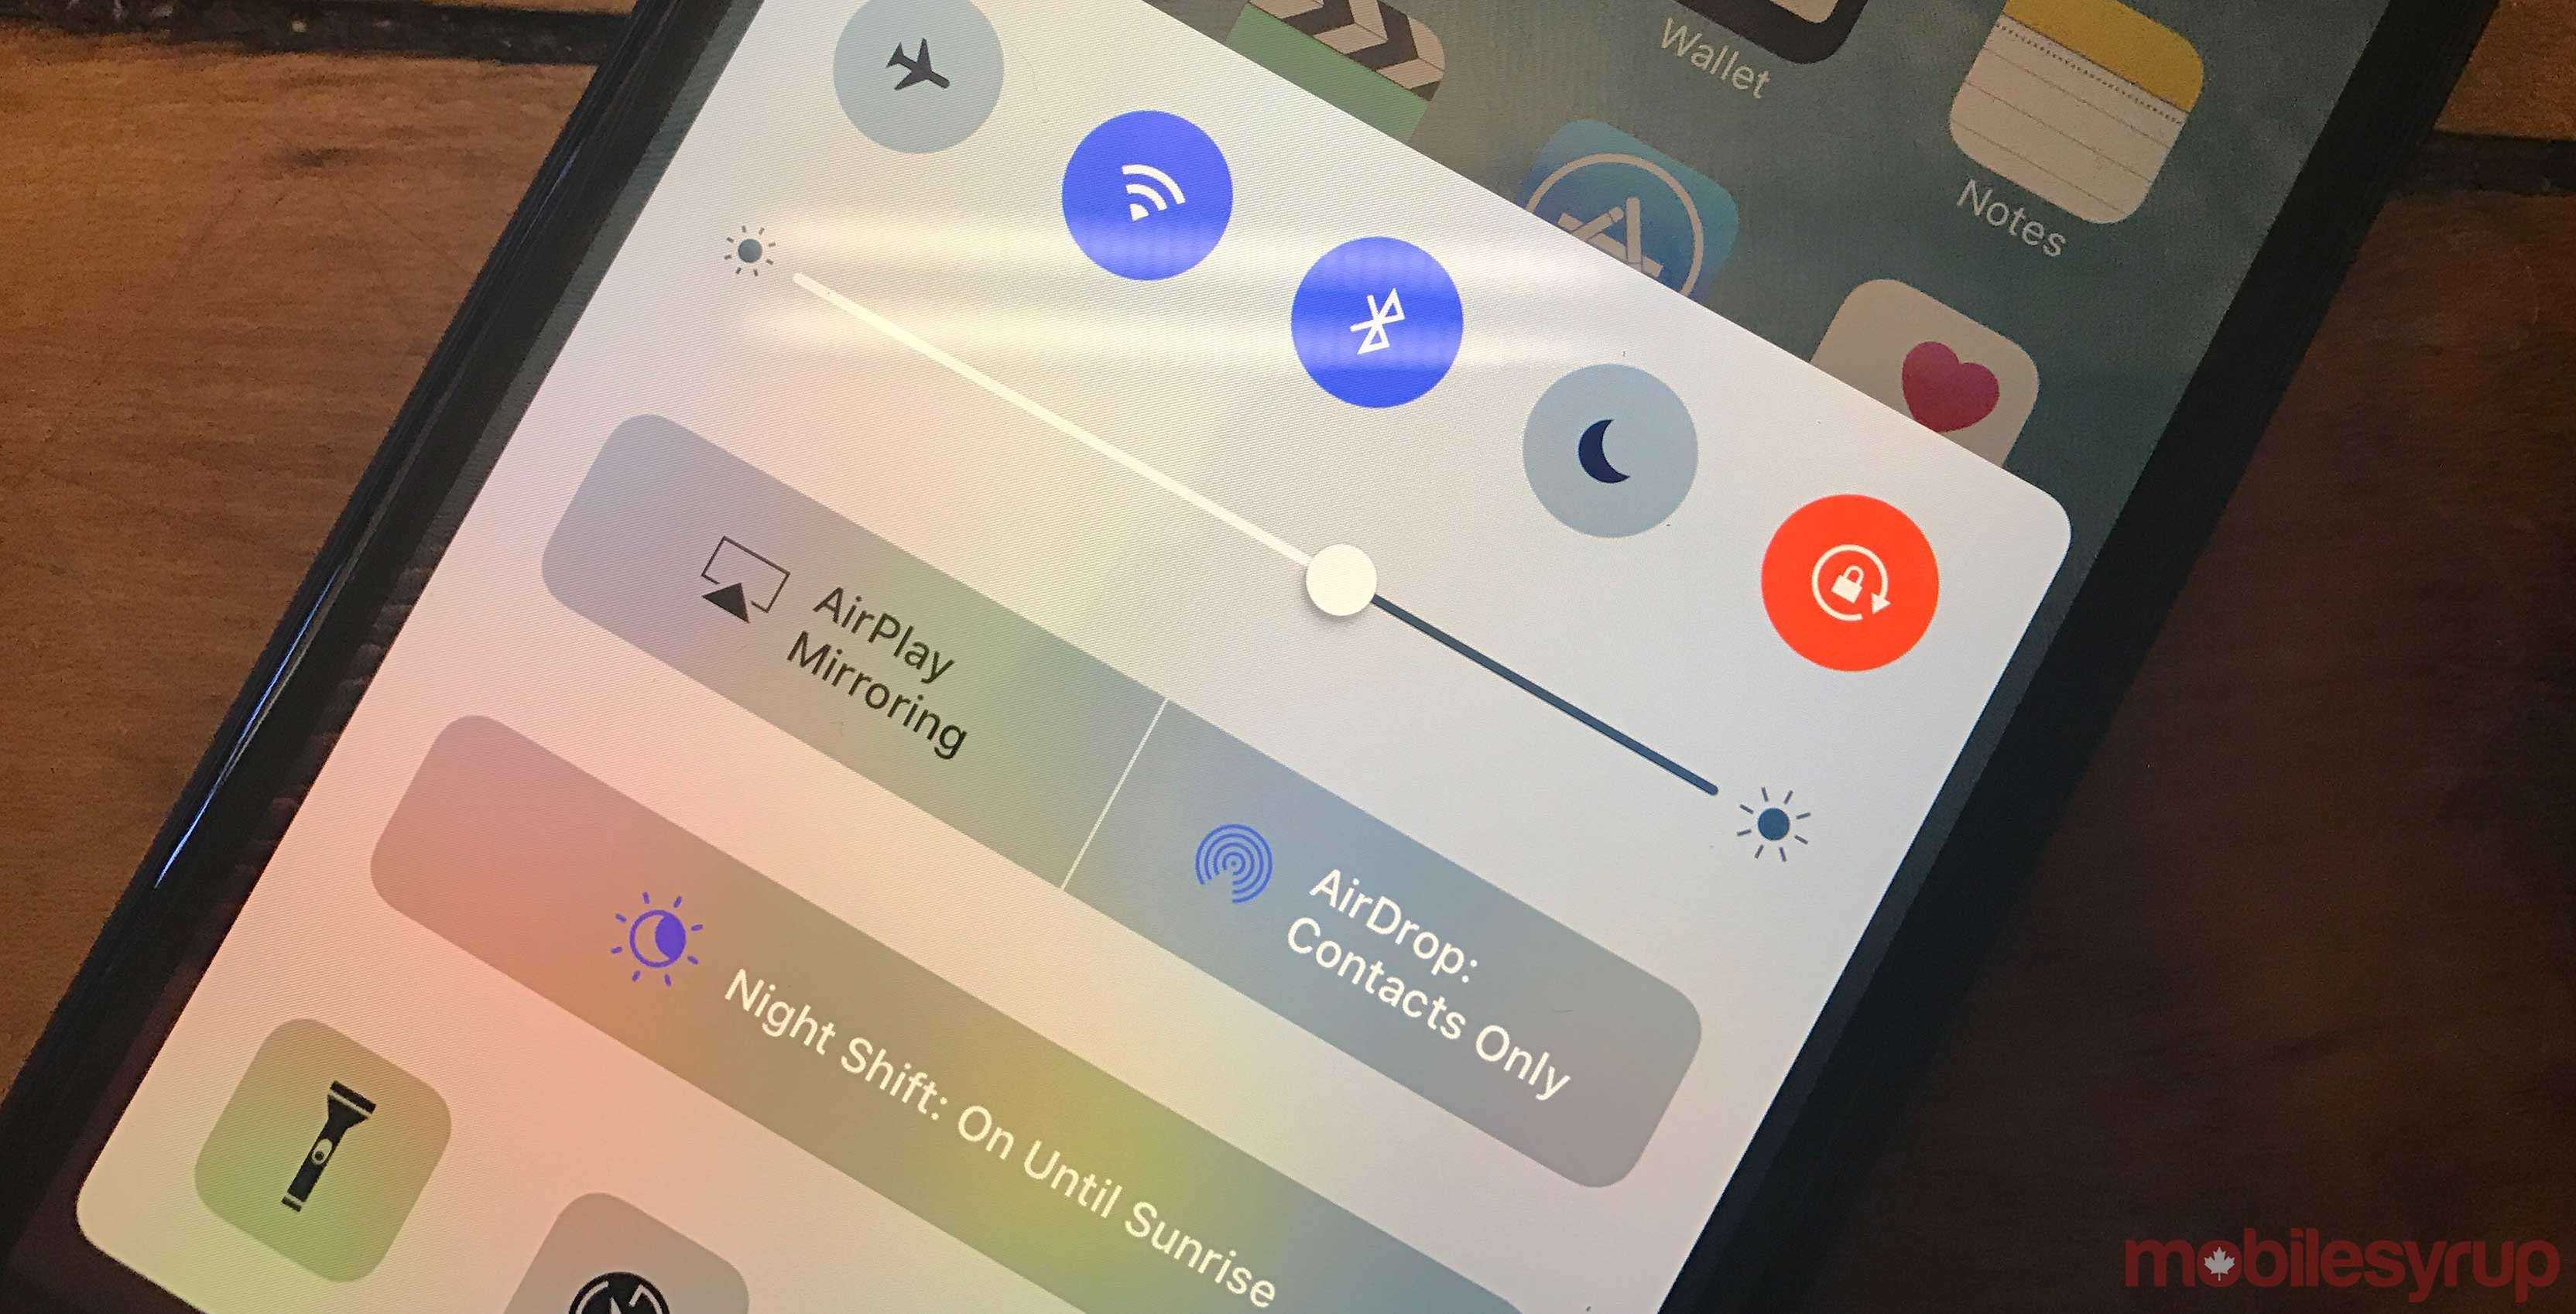 Night Shift on iOS